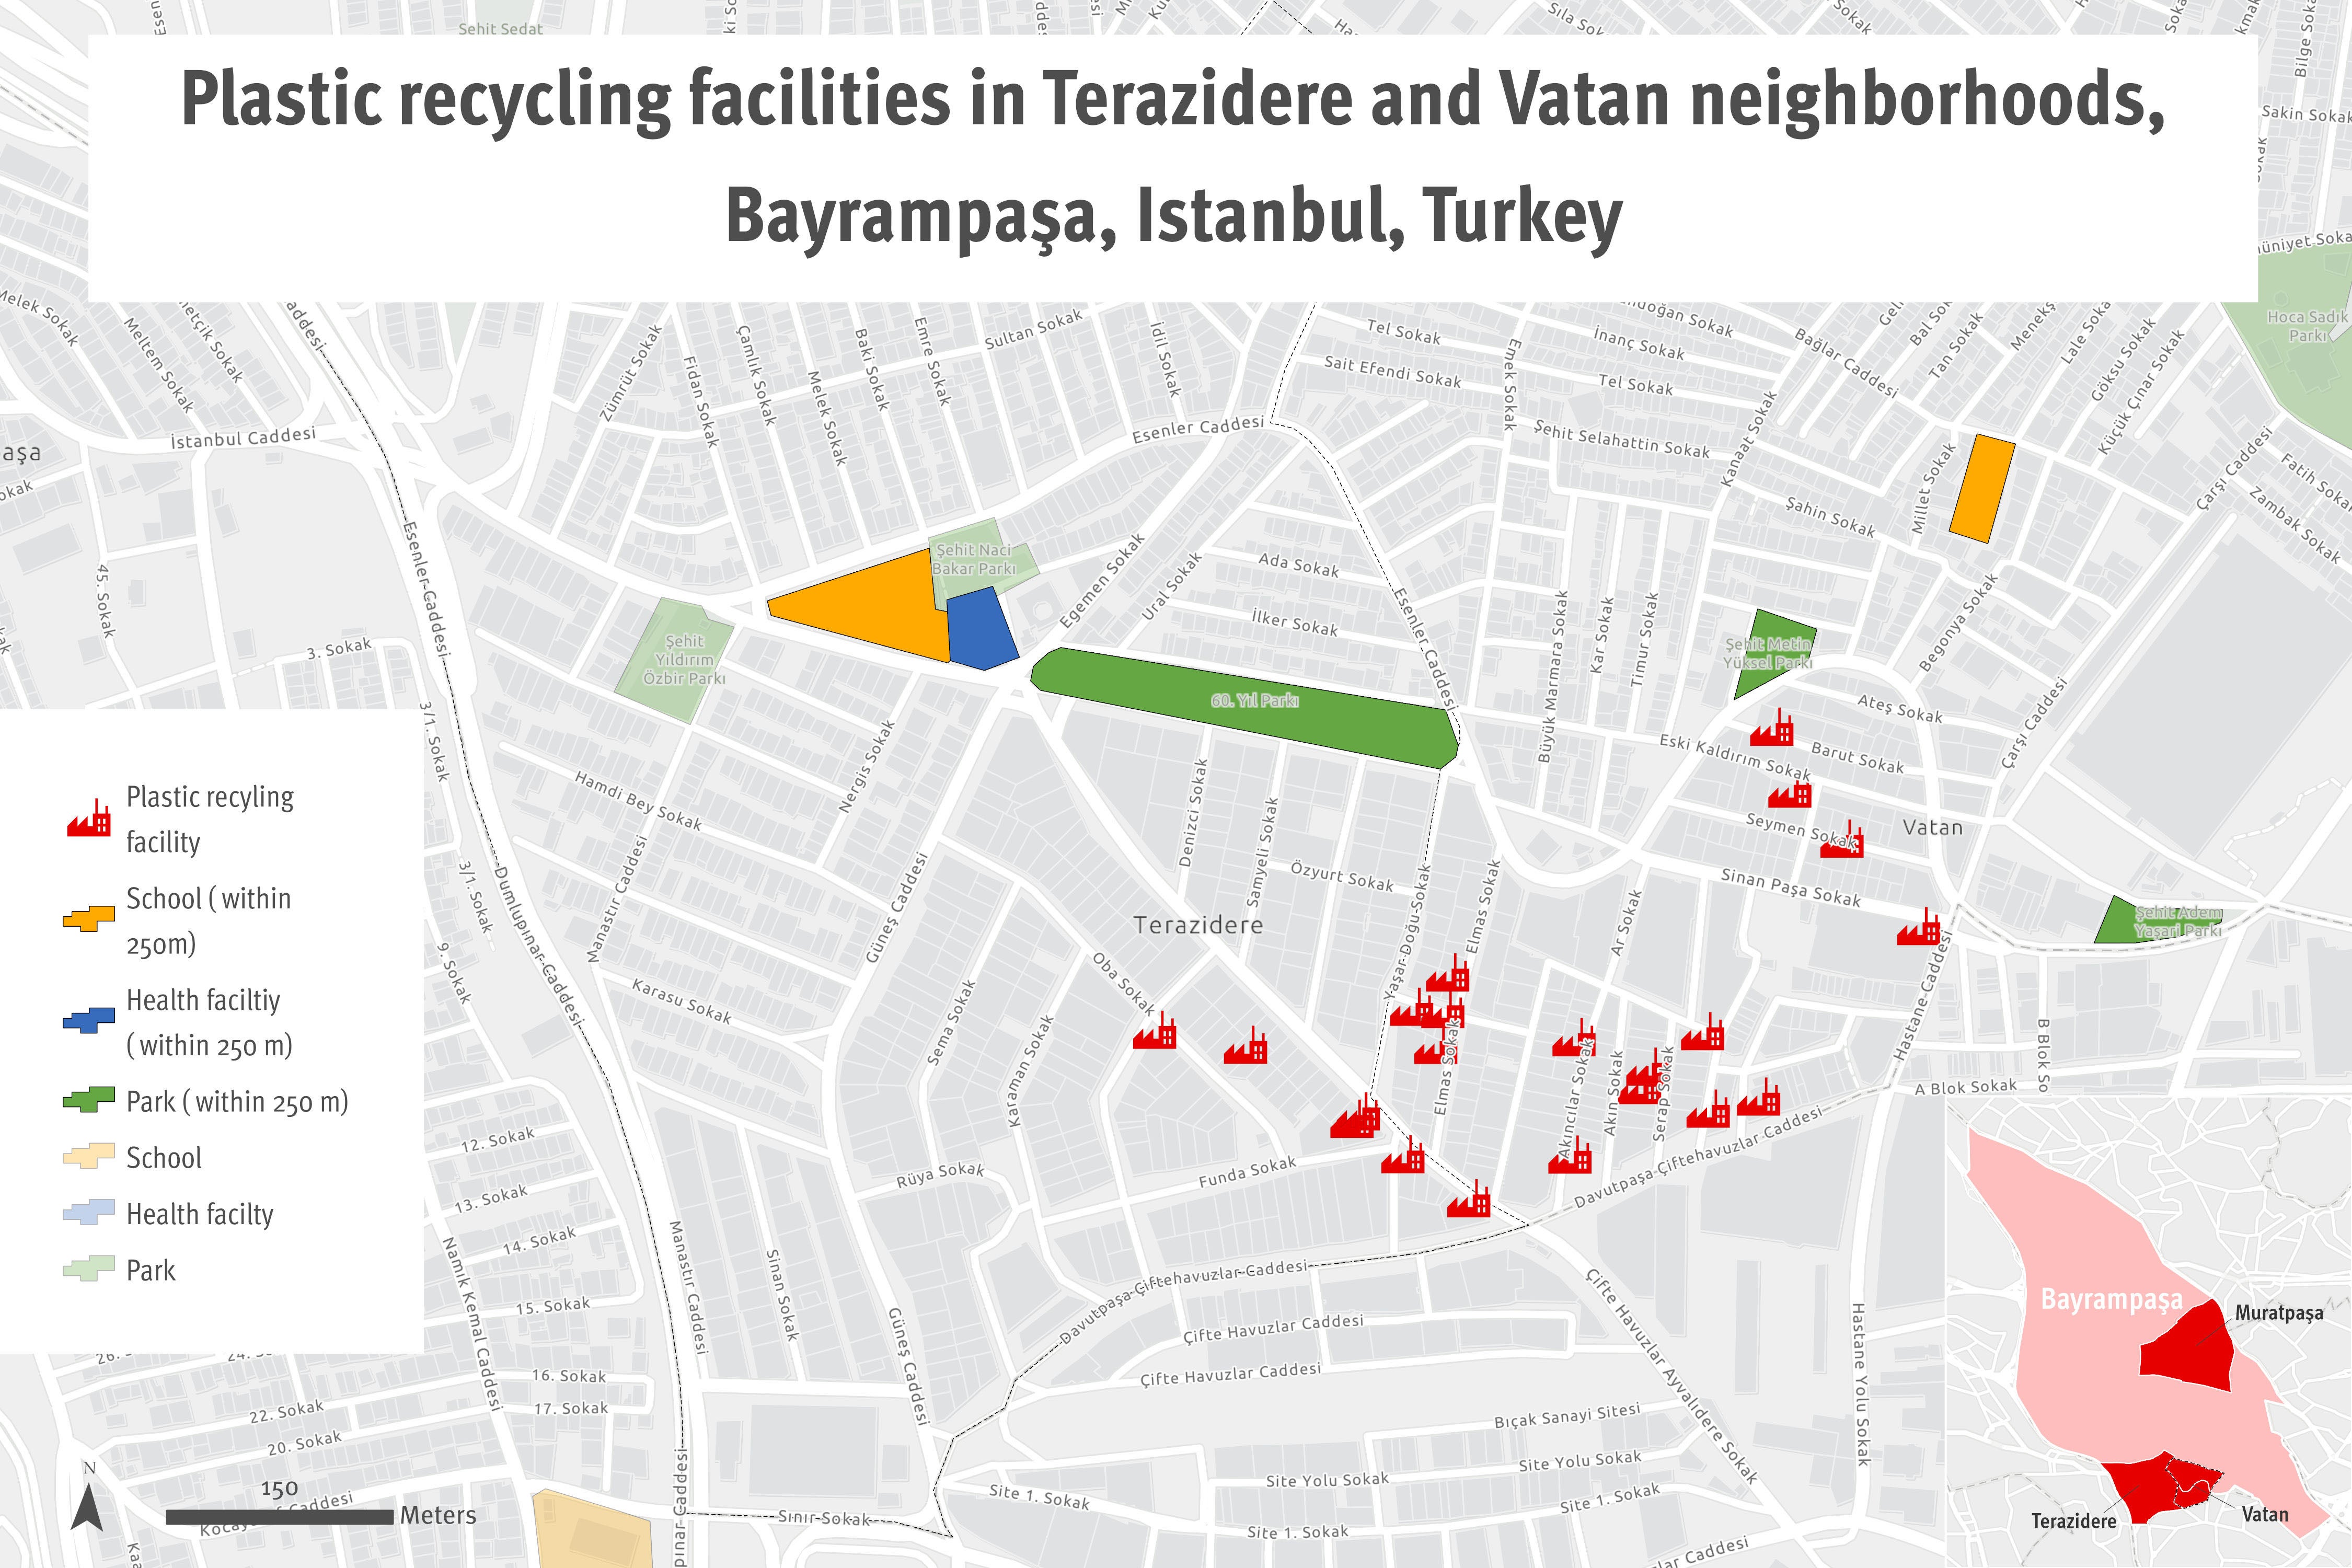 202209ehr_turkey_PlasticRecylingFacilities_Bayrampasa_Istanbul